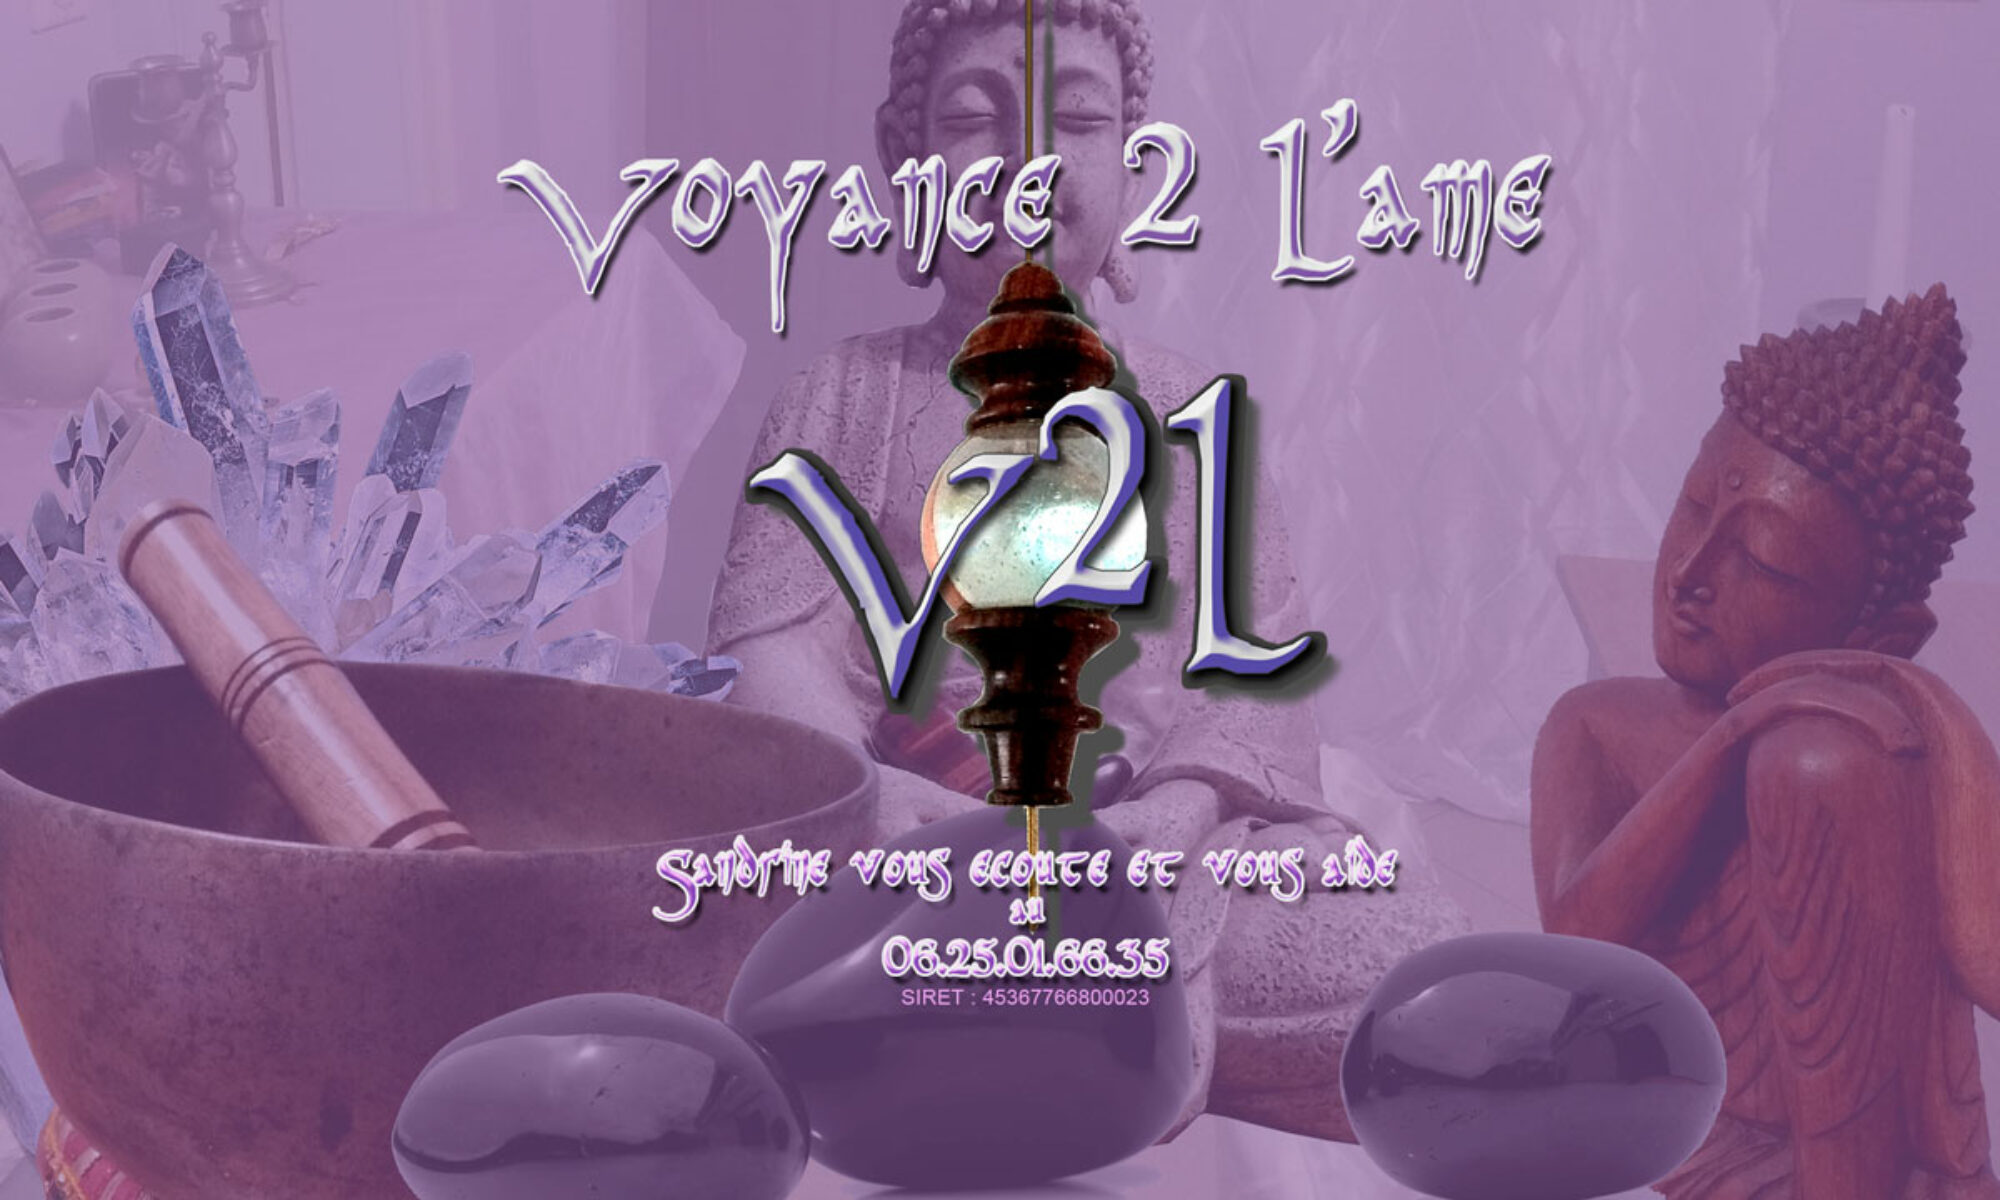 Voyance2lame